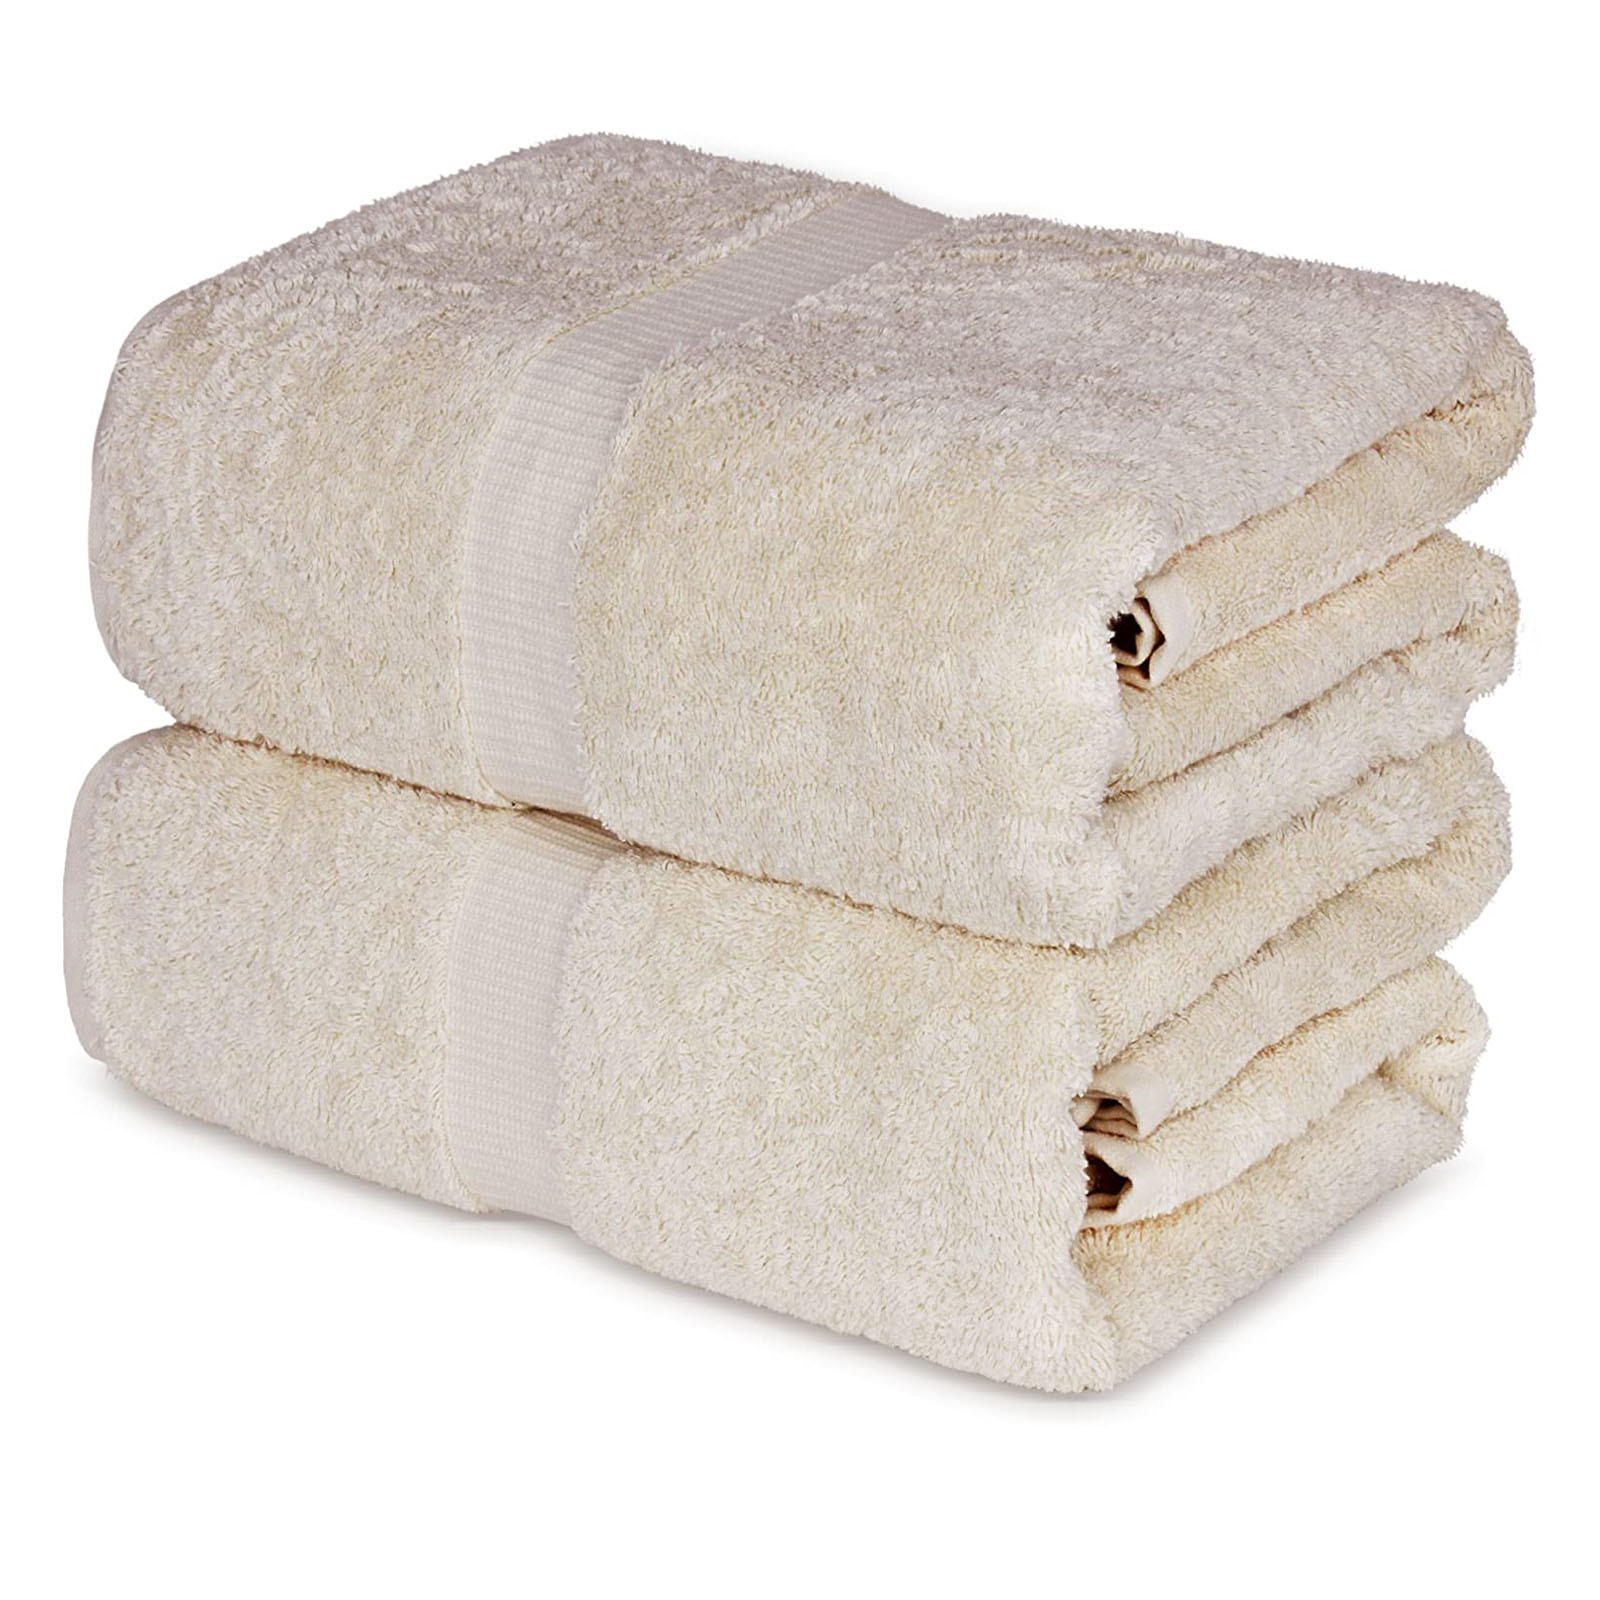 Towel 100% Turkish Cotton Bath Sheets 700 GSM 35 x 70 Inch Eco-Friendly